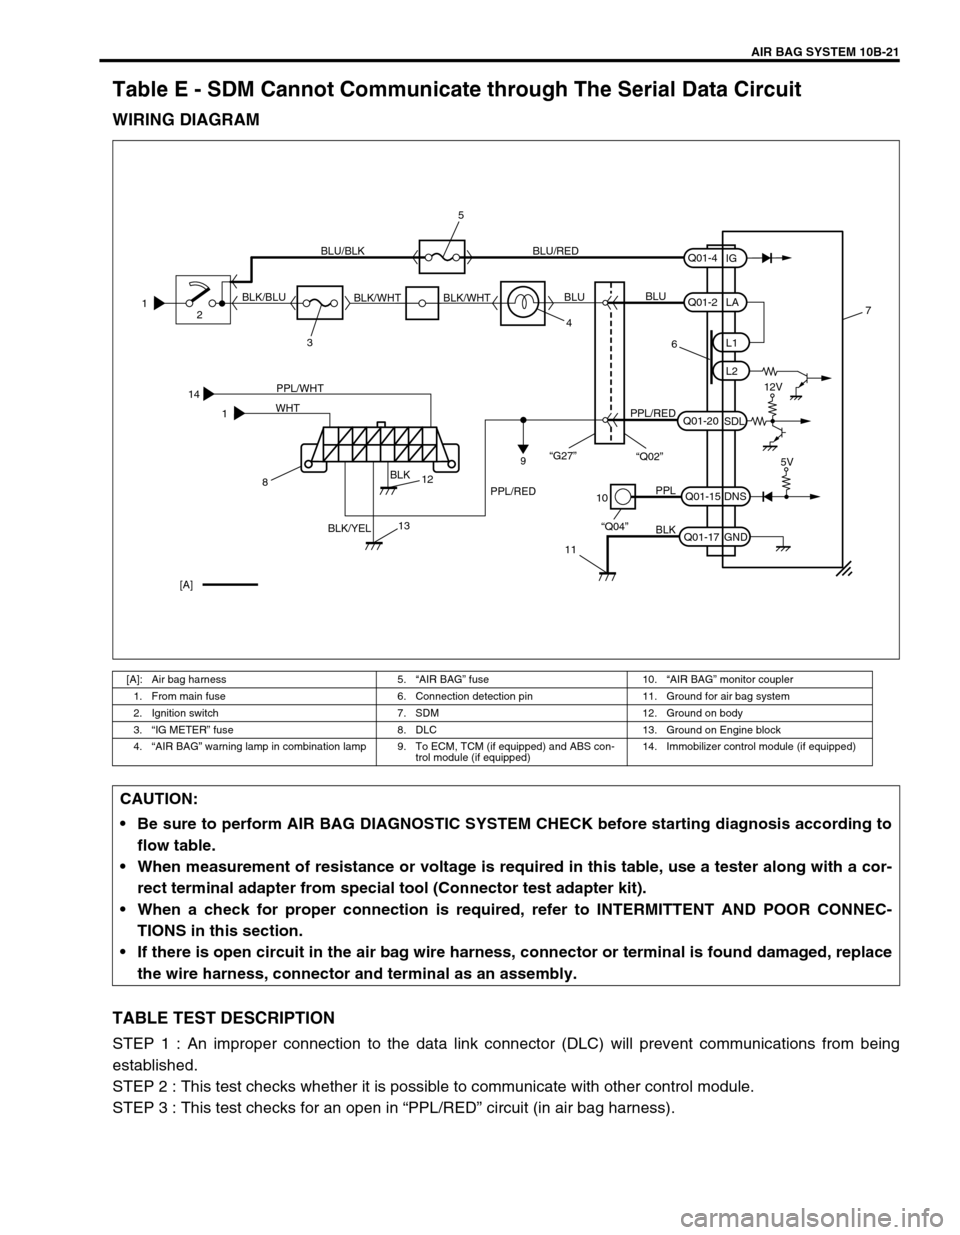 SUZUKI GRAND VITARA 1999 2.G Manual PDF AIR BAG SYSTEM 10B-21
Table E - SDM Cannot Communicate through The Serial Data Circuit
WIRING DIAGRAM
TABLE TEST DESCRIPTION
STEP 1 : An improper connection to the data link connector (DLC) will preve